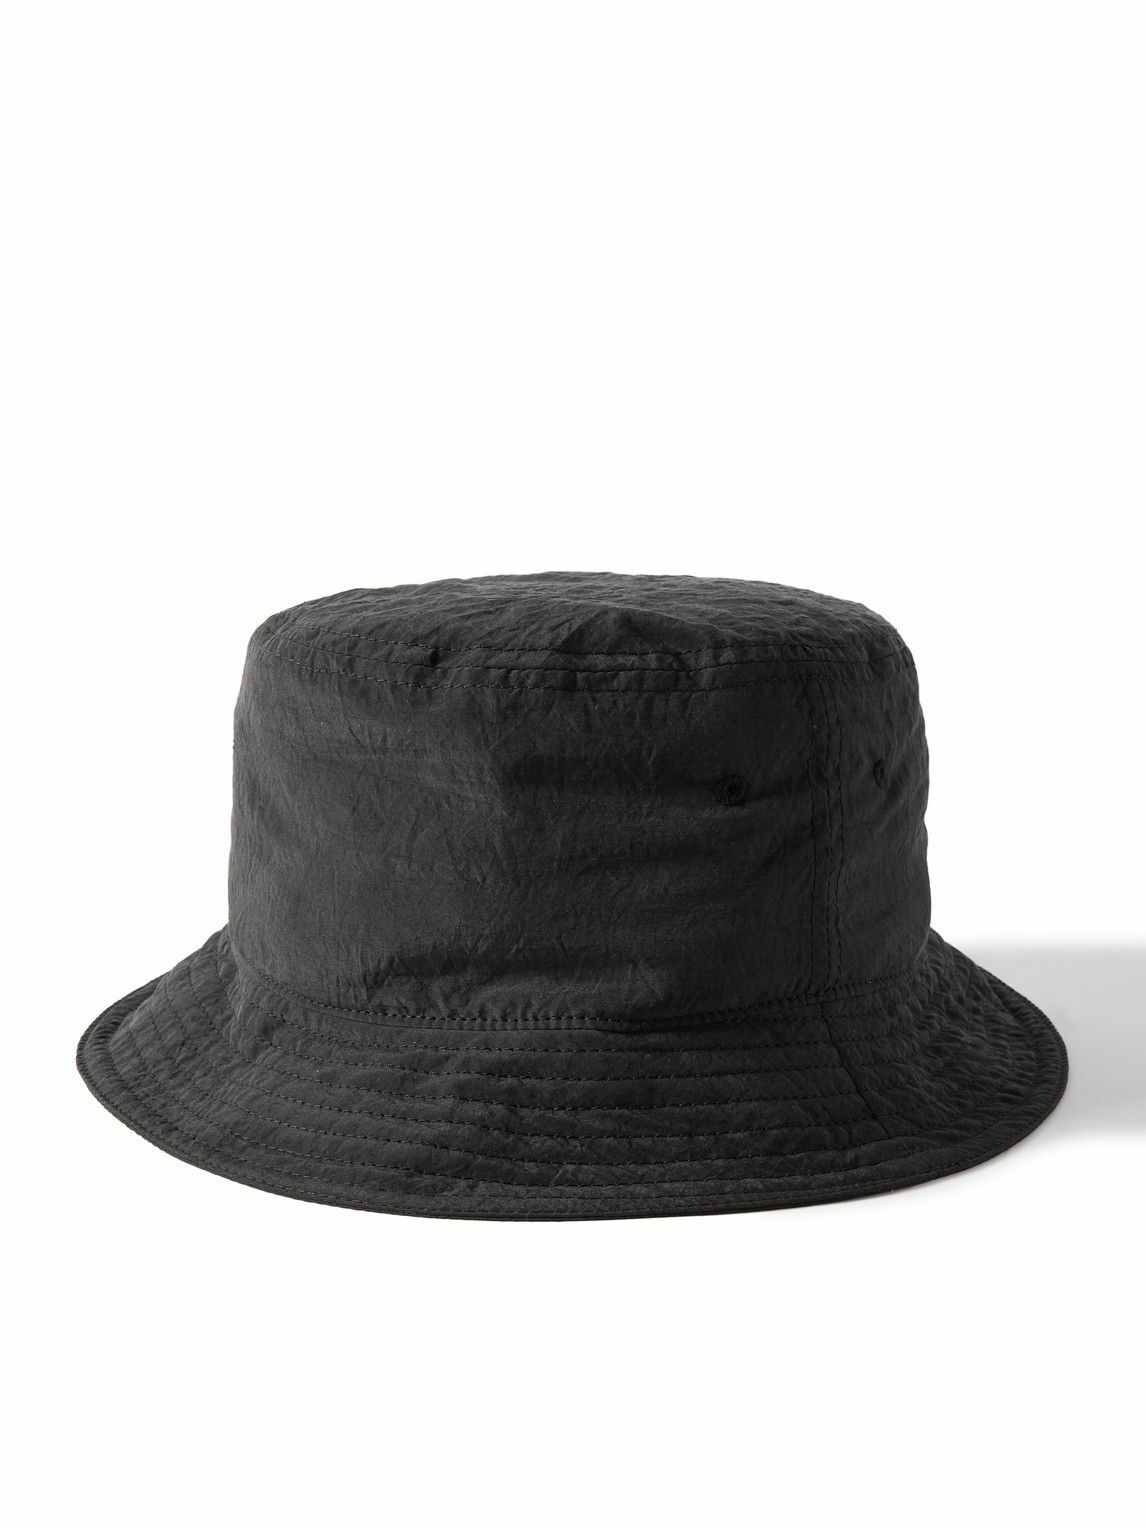 SSAM - Romeo Techno Silk Bucket Hat - Black SSAM